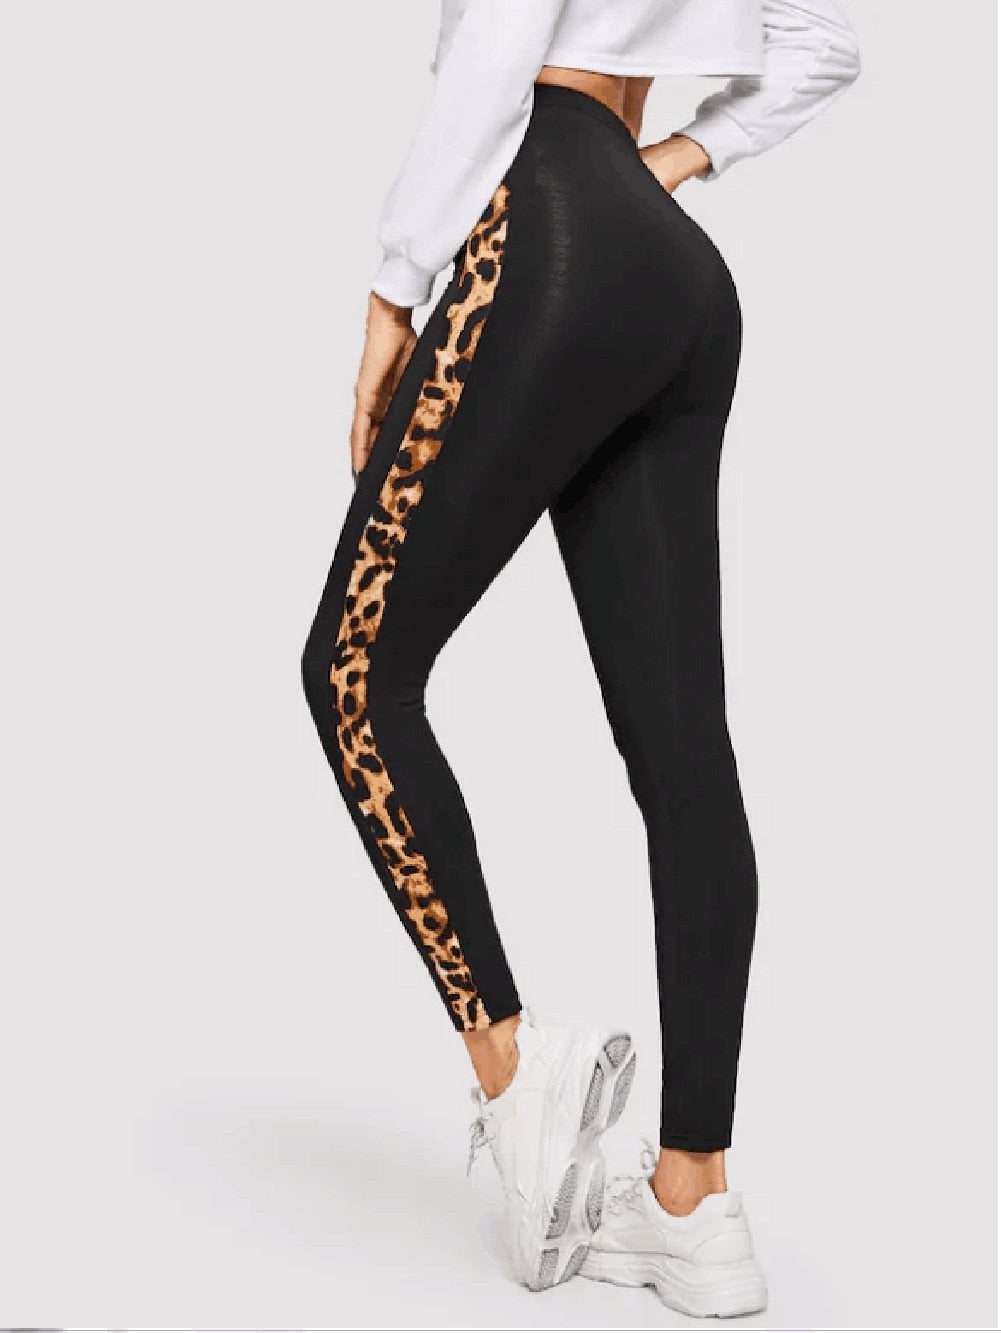 Geumxl High Waist Fitness Sport Pants Leggings Women Leopard Patchwork Stretch Workout Running Trousers Gym Slim Pants